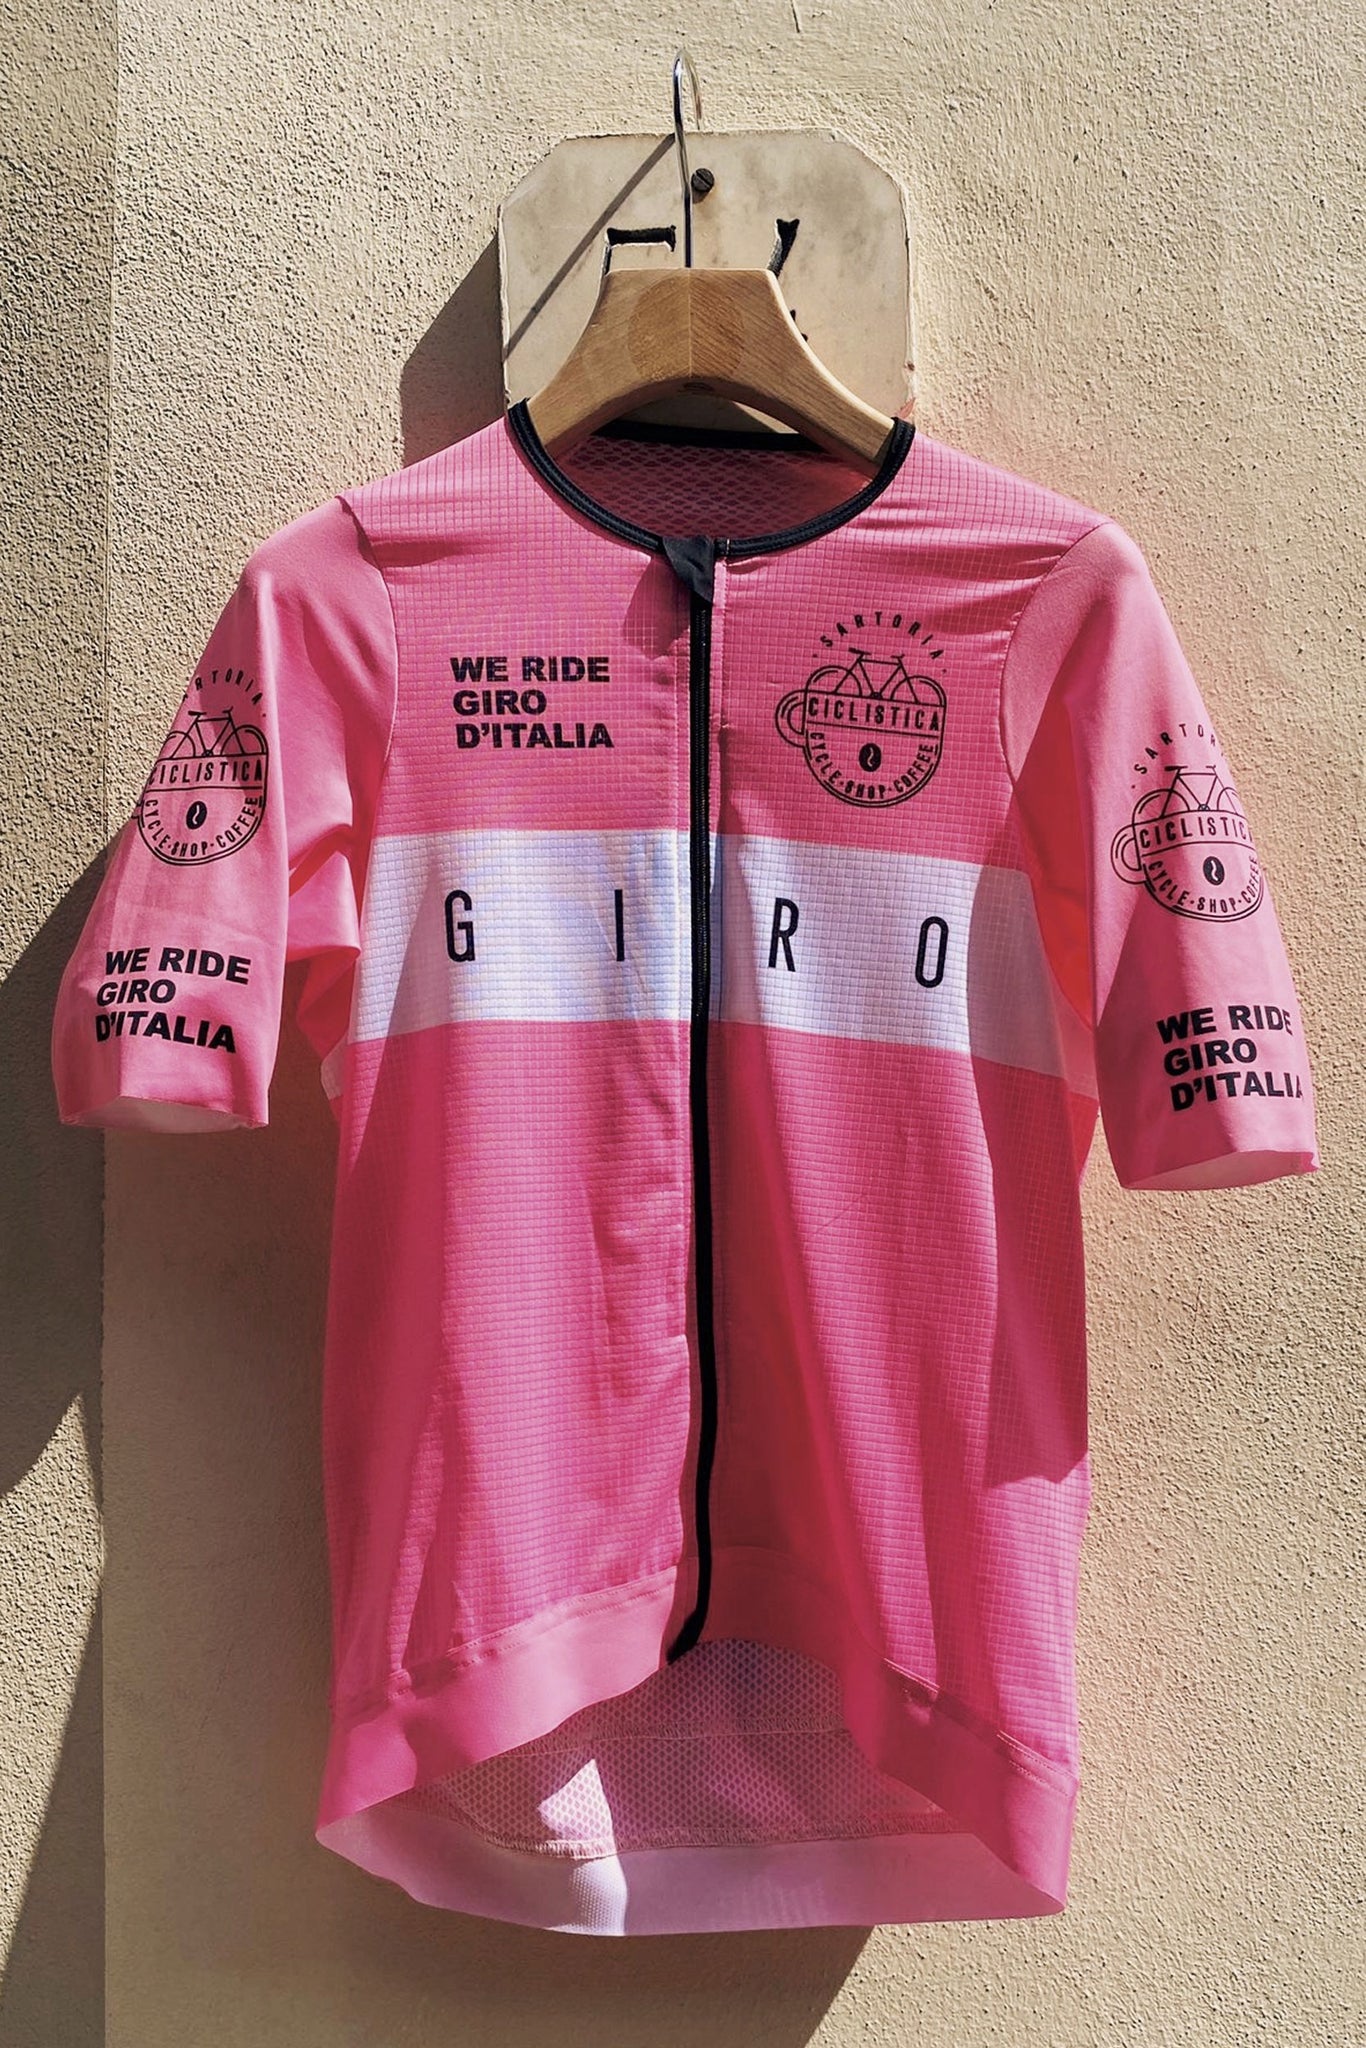 Ultralight jersey - Homage to Giro d'Italia